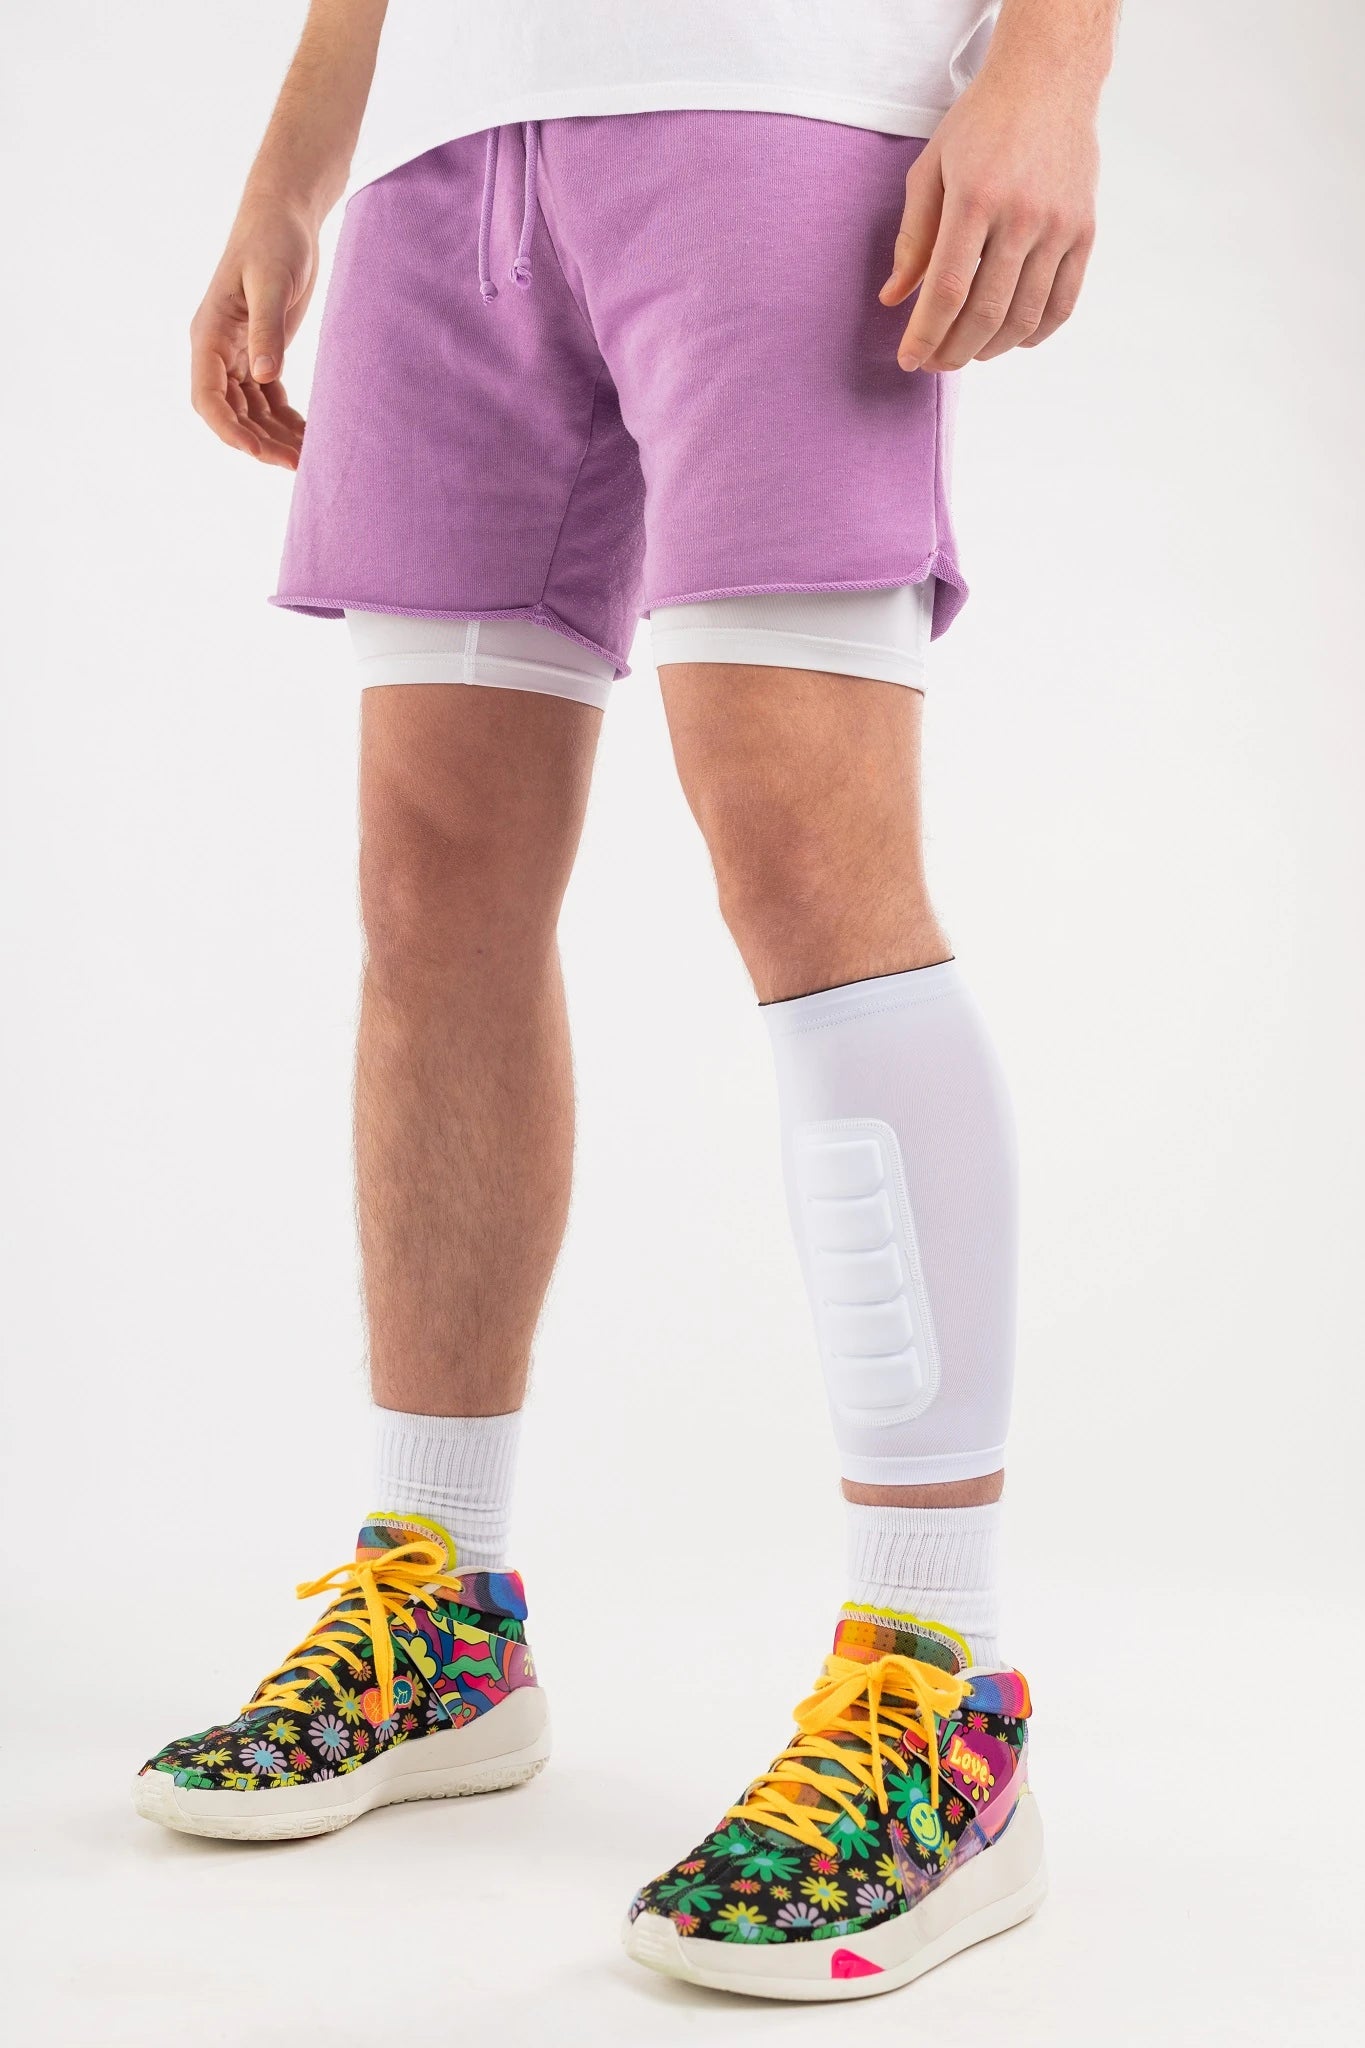 1 Leg Sleeve for Basketball Drip